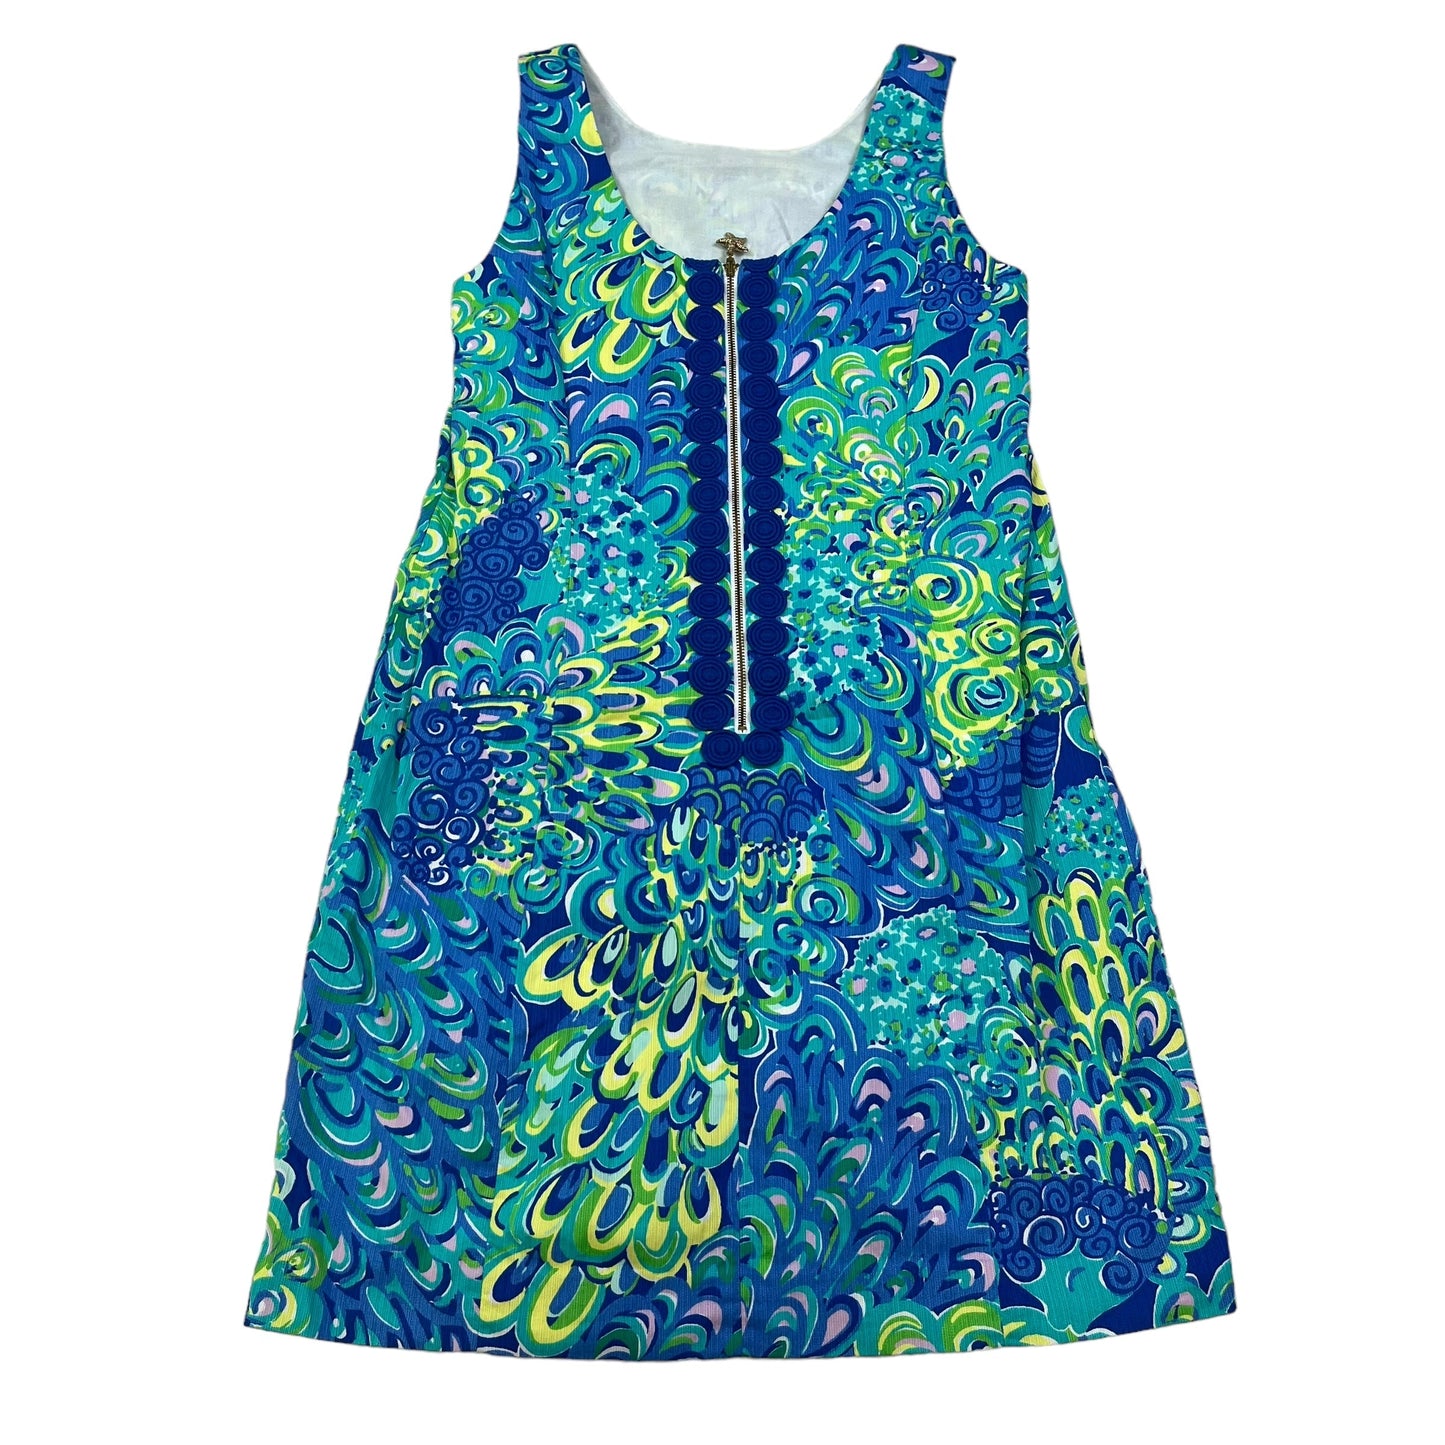 Blue & Green Dress Designer Lilly Pulitzer, Size 4